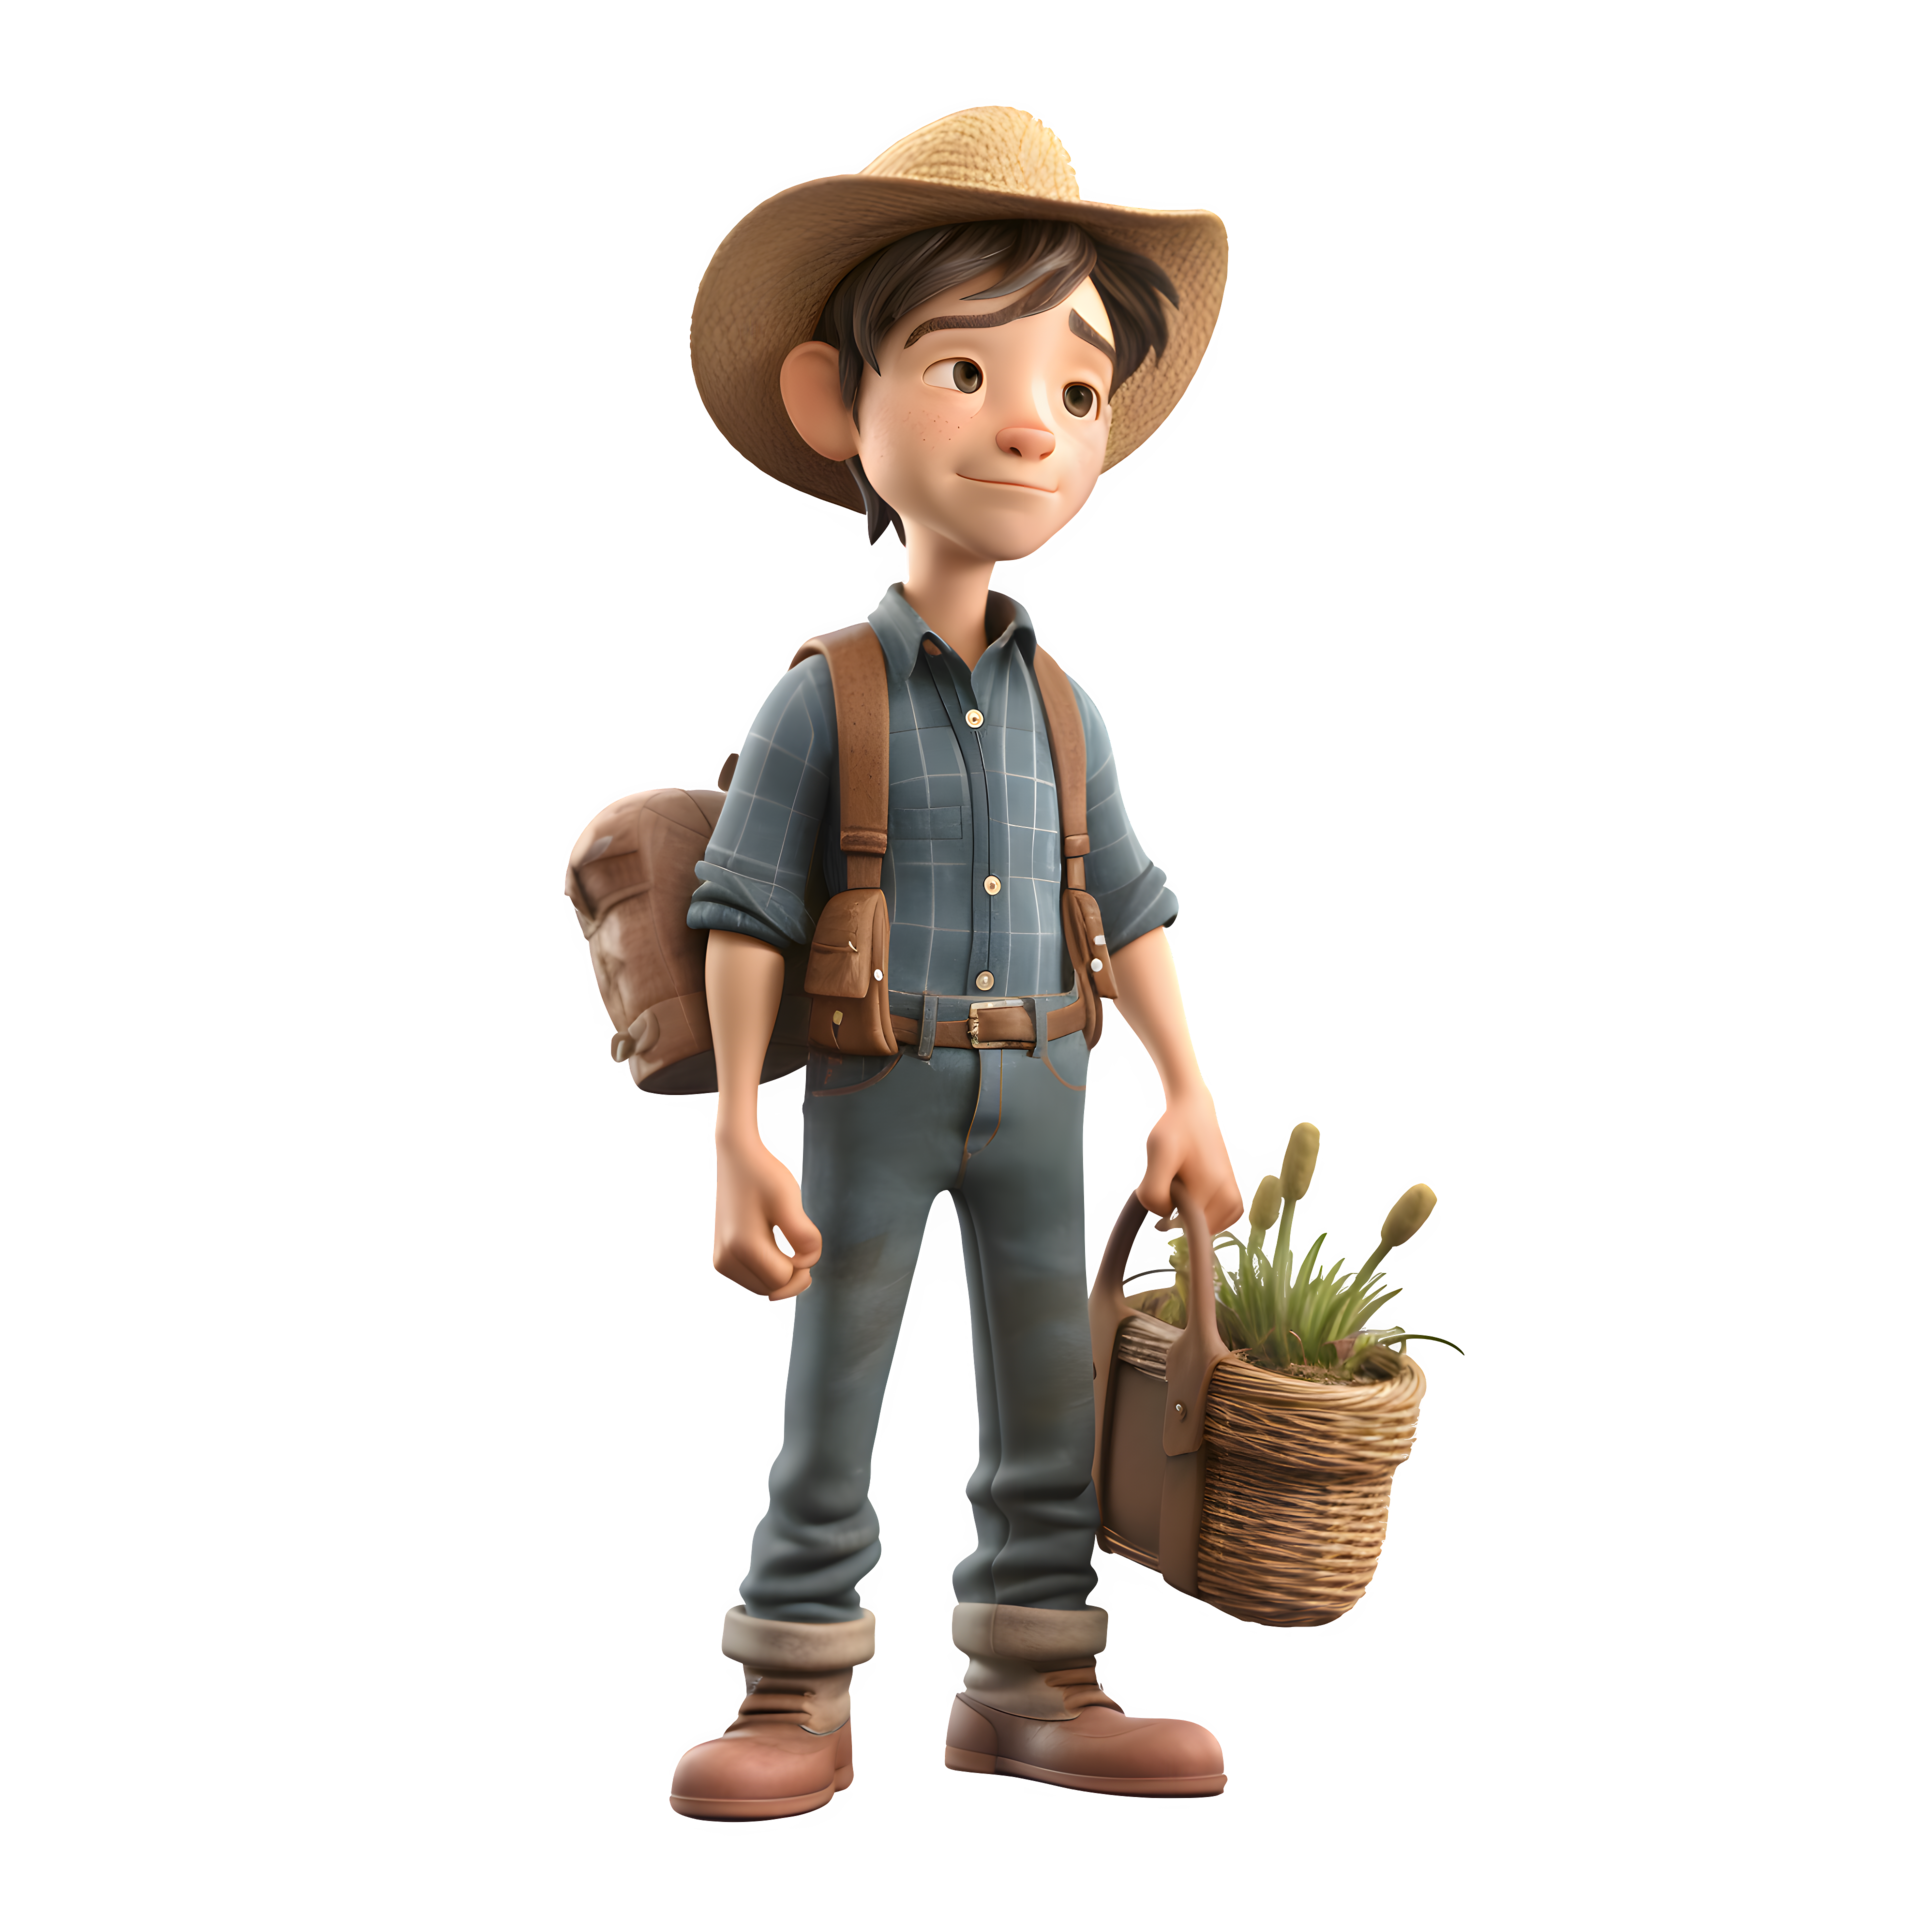 3D illustration. Tired Farmer 3D cartoon character. Farmer is